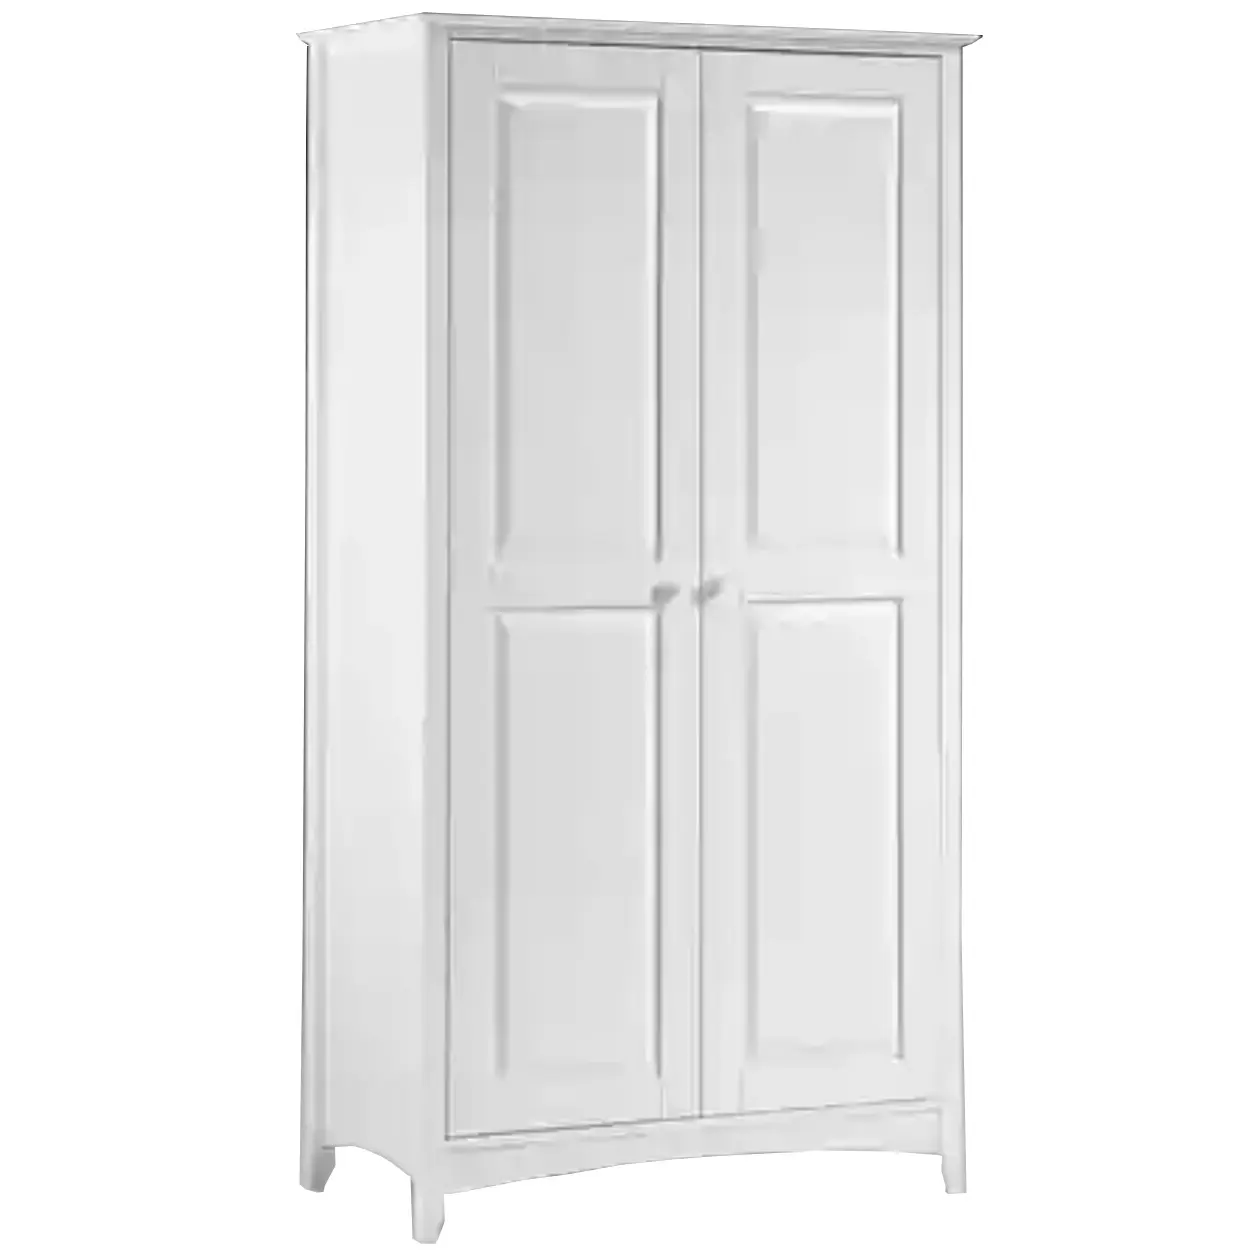 modern bedroom wooden wardrobes white color two door armoire